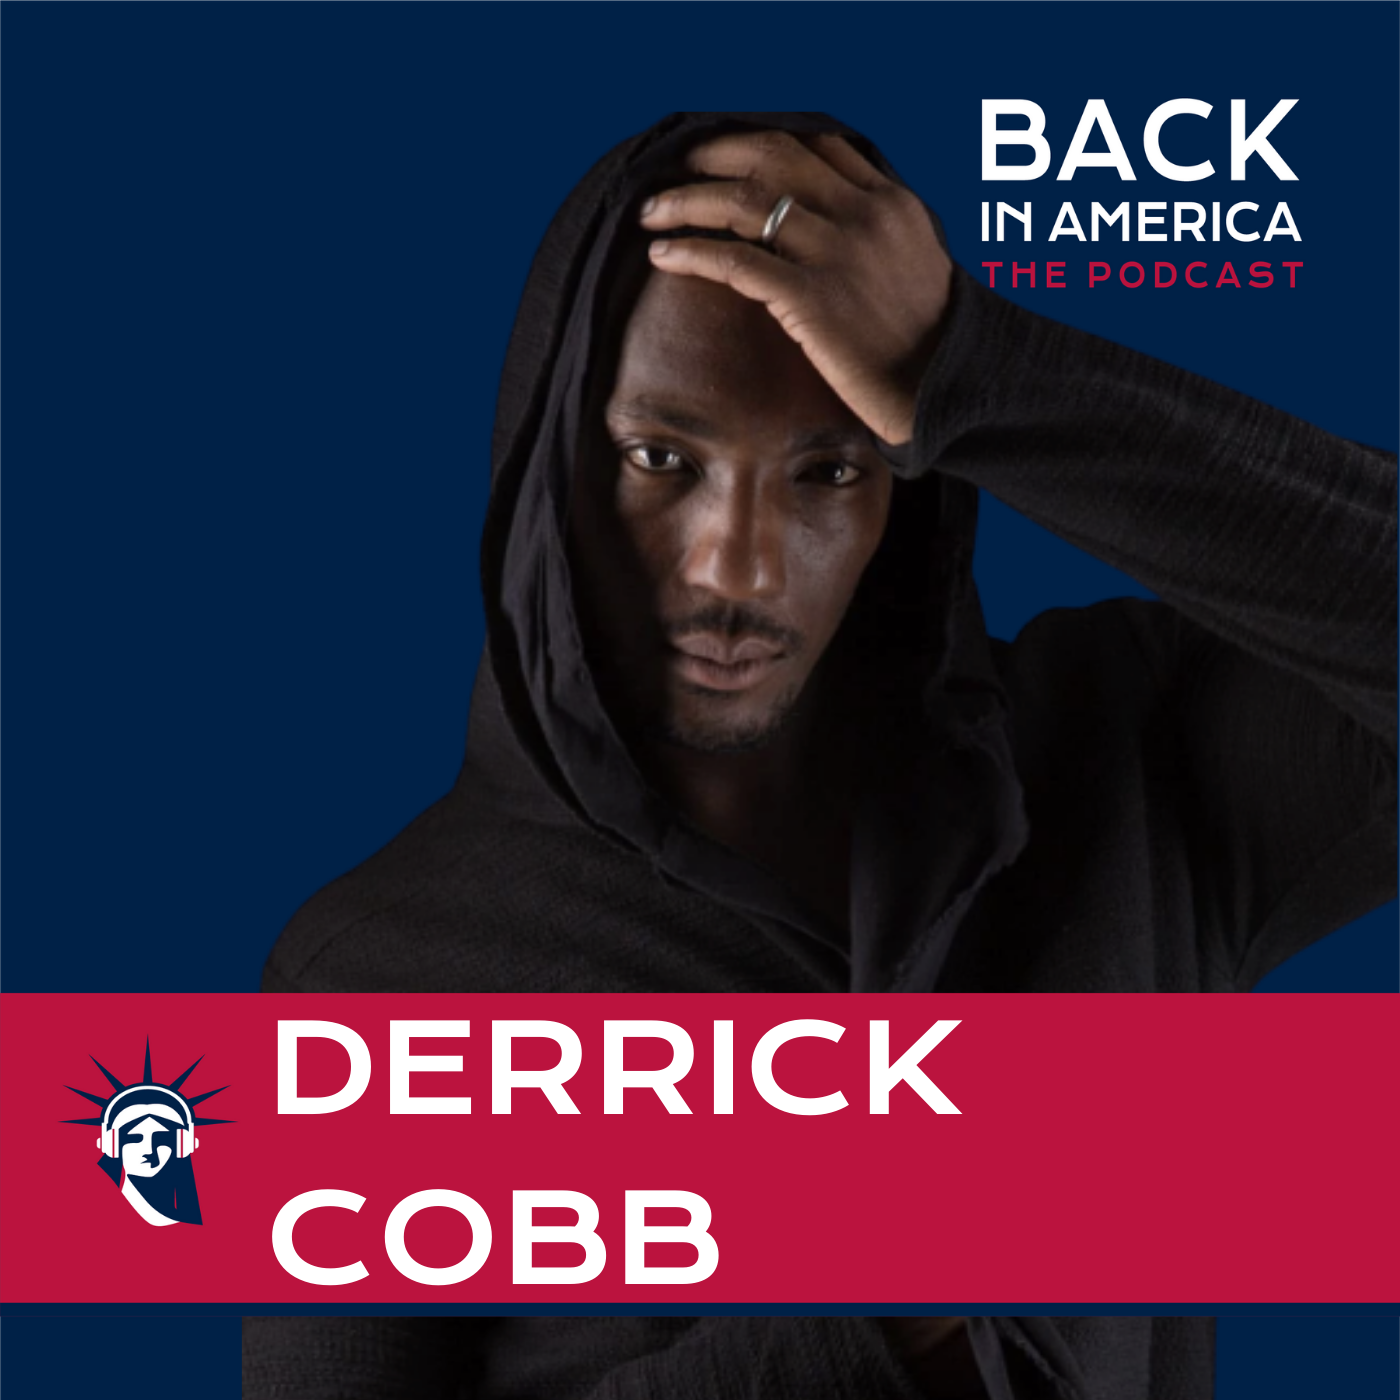 Derrick Cobb podcast back in america